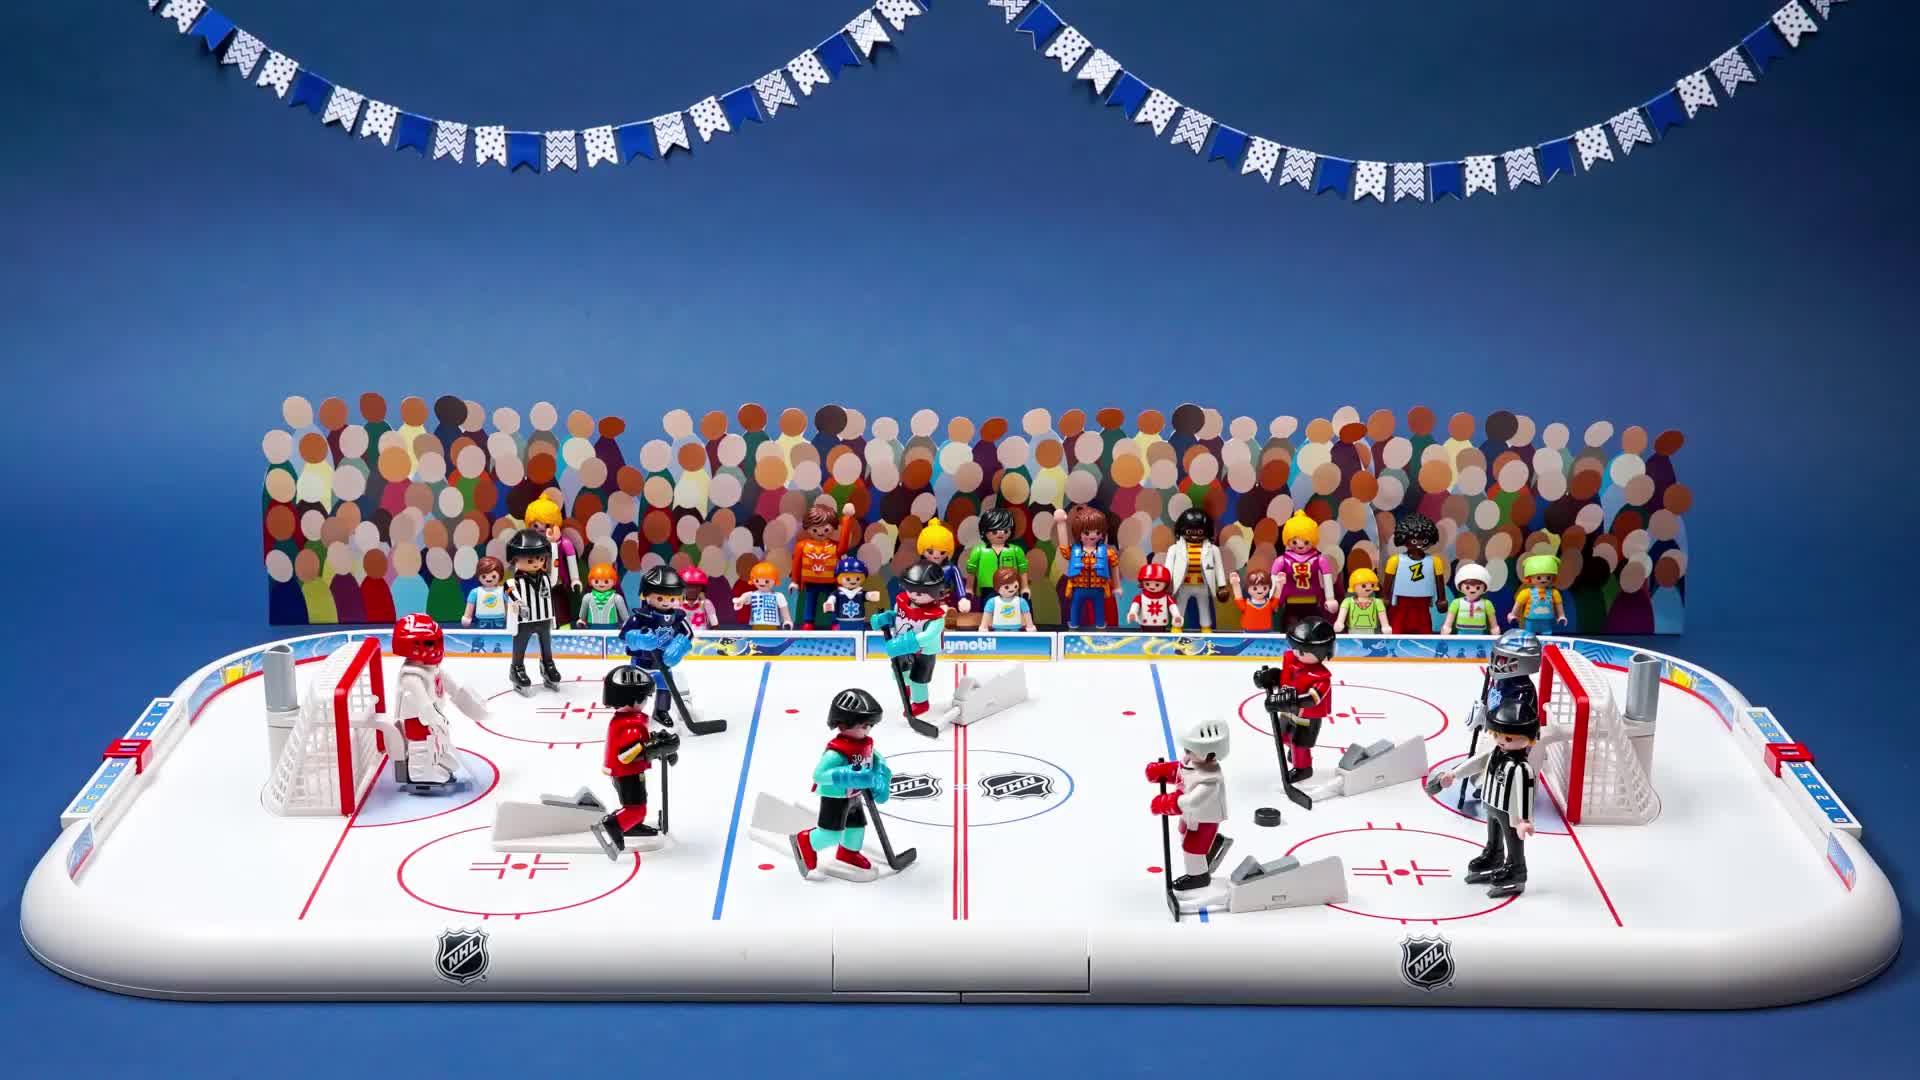  Playmobil NHL Stanley Cup Presentation Set, White